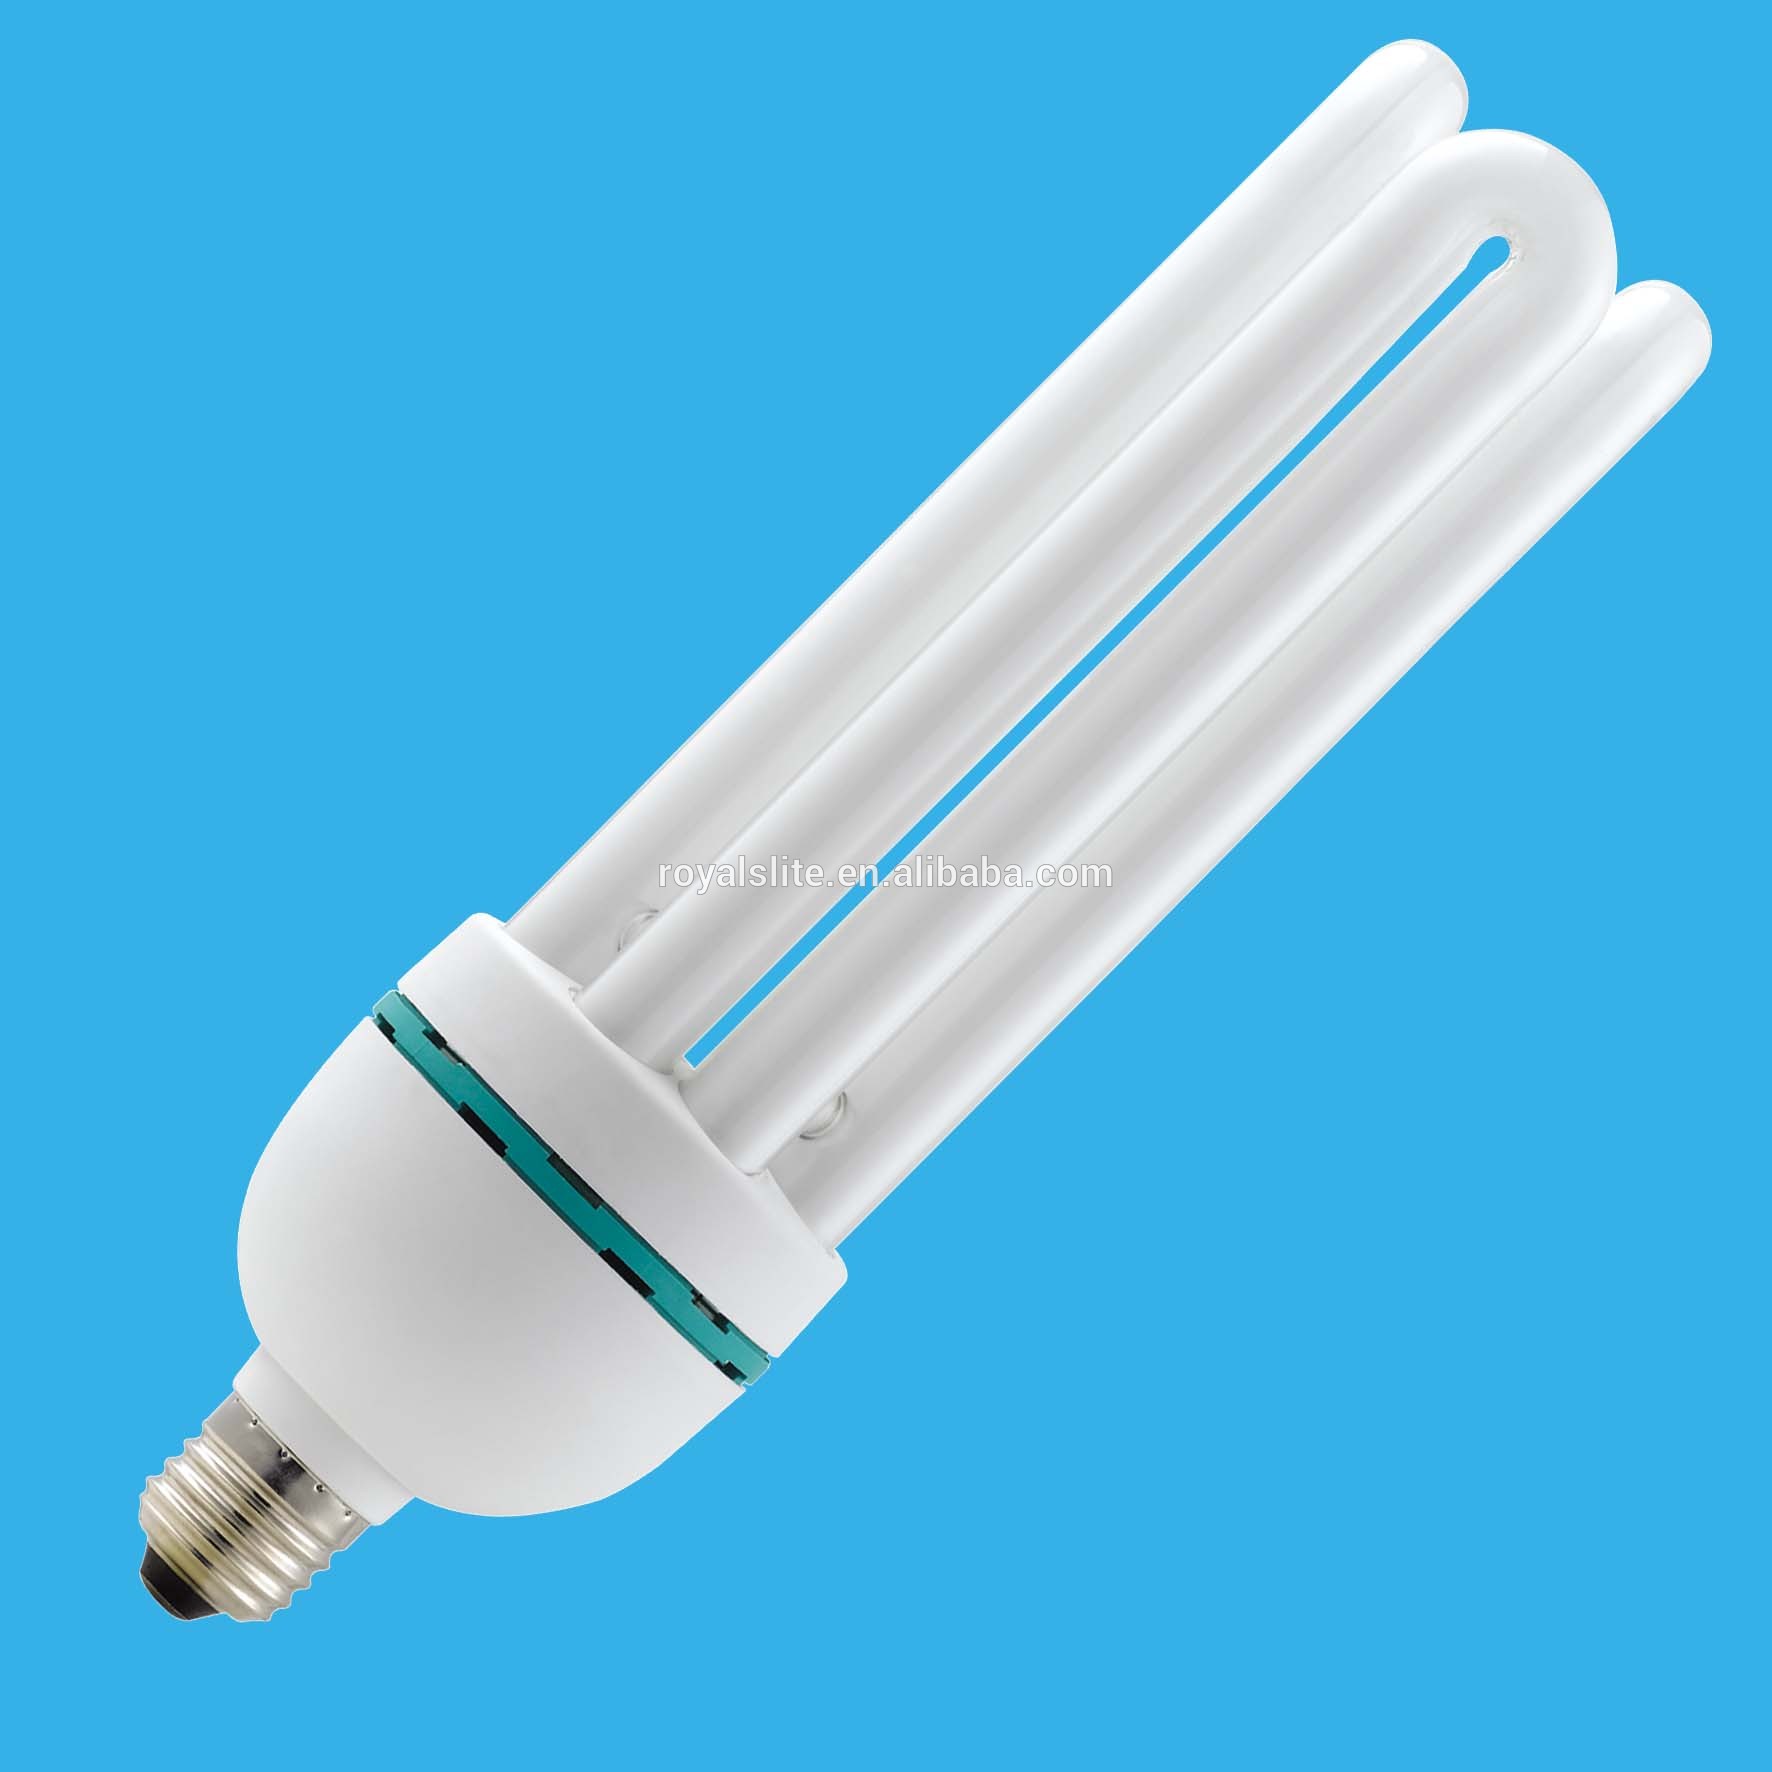 4U COMPACT Fluorescent LAMP ENERGY SAVING BULB CFL LIGHT